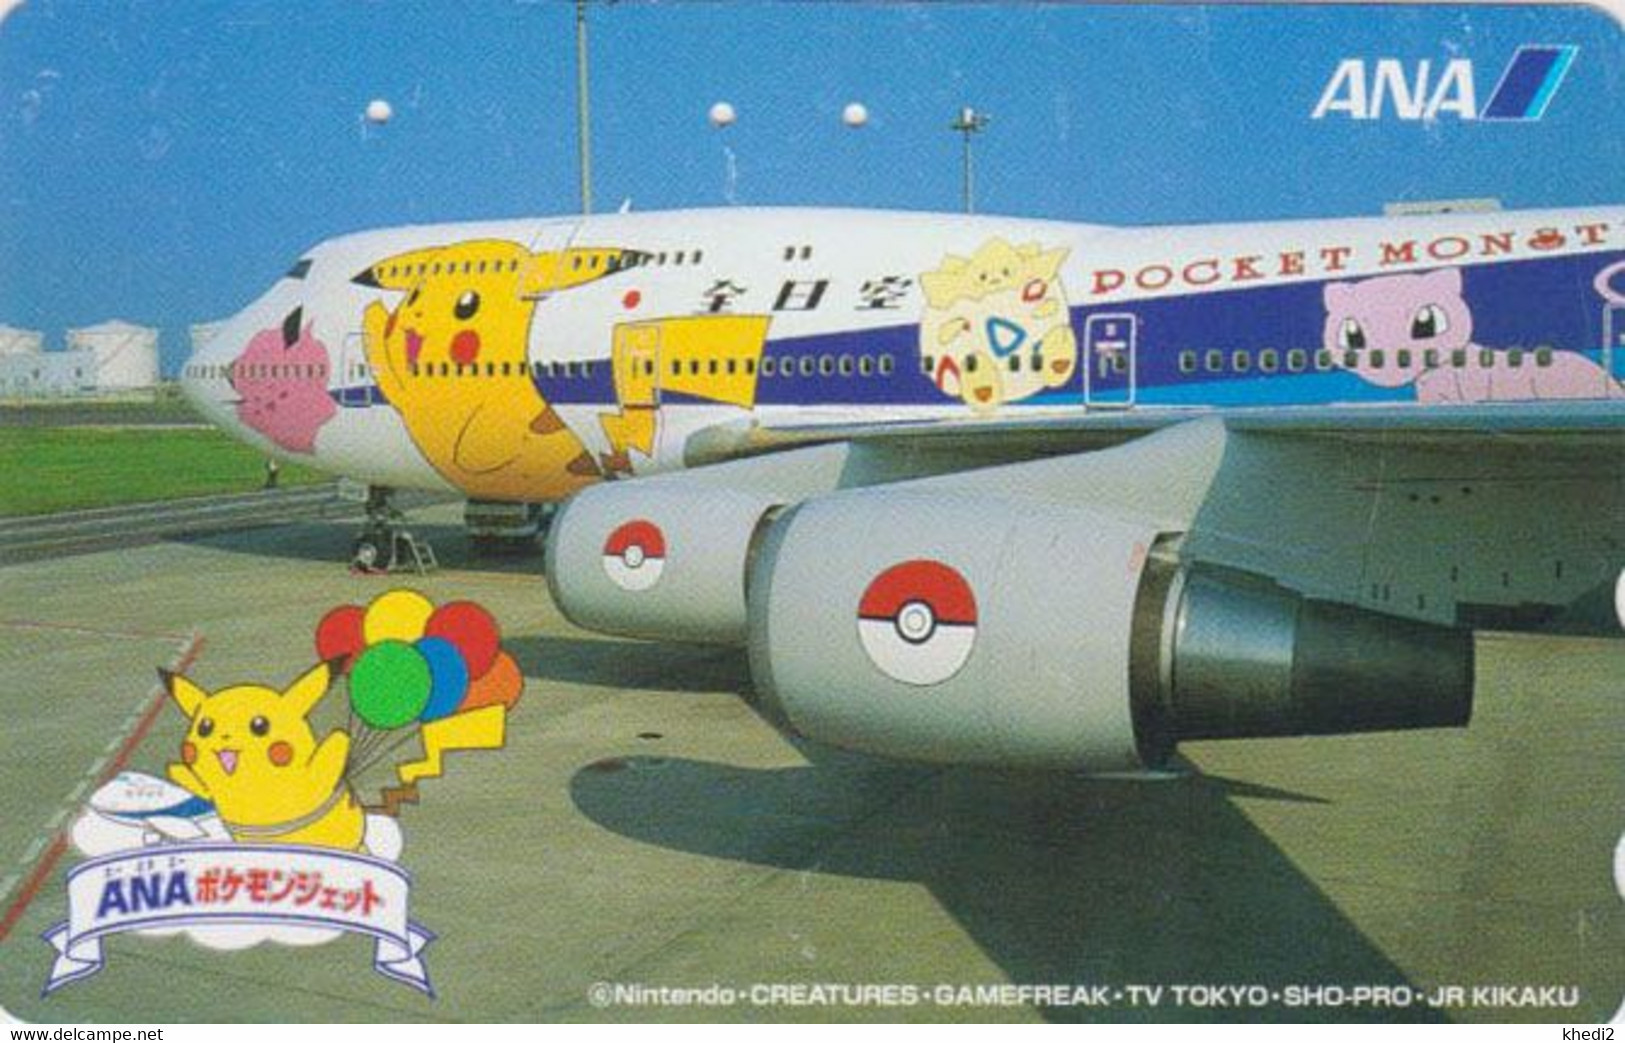 Télécarte JAPON / 110-016  - MANGA - NINTENDO POKEMON AVION ANA  - BALLOON & PLANE JAPAN Phonecard  - 19793 - Airplanes